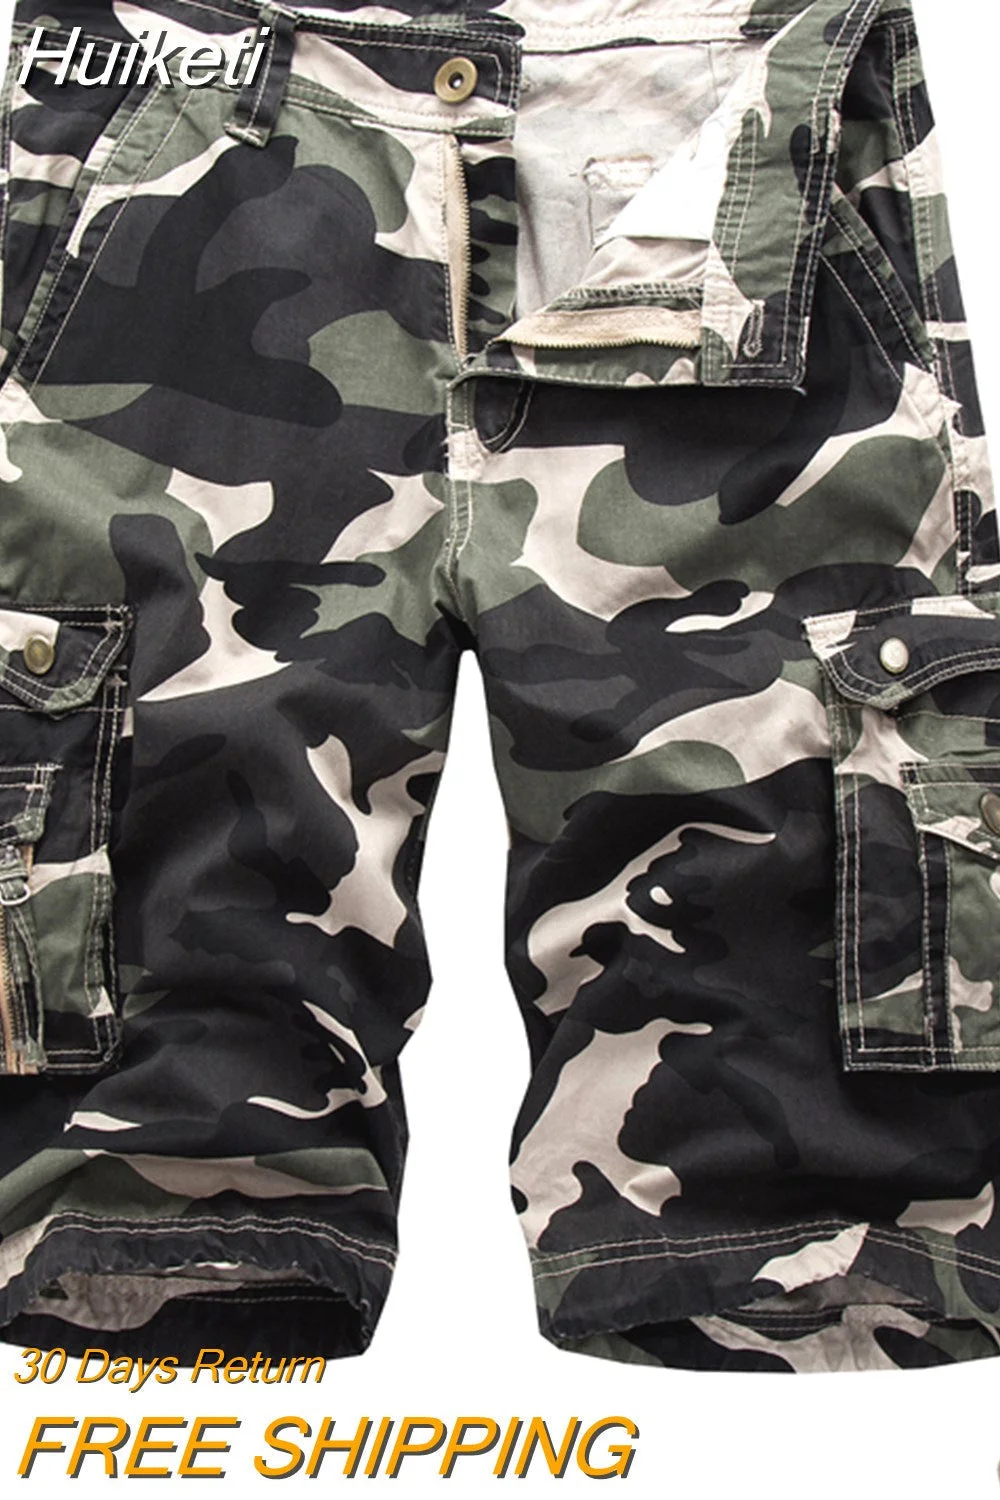 Huiketi Cargo Shorts Men Top Design Camouflage Military Army Khaki Shorts Homme Summer Outwear Hip Hop Casual Cargo Camo Men Shorts